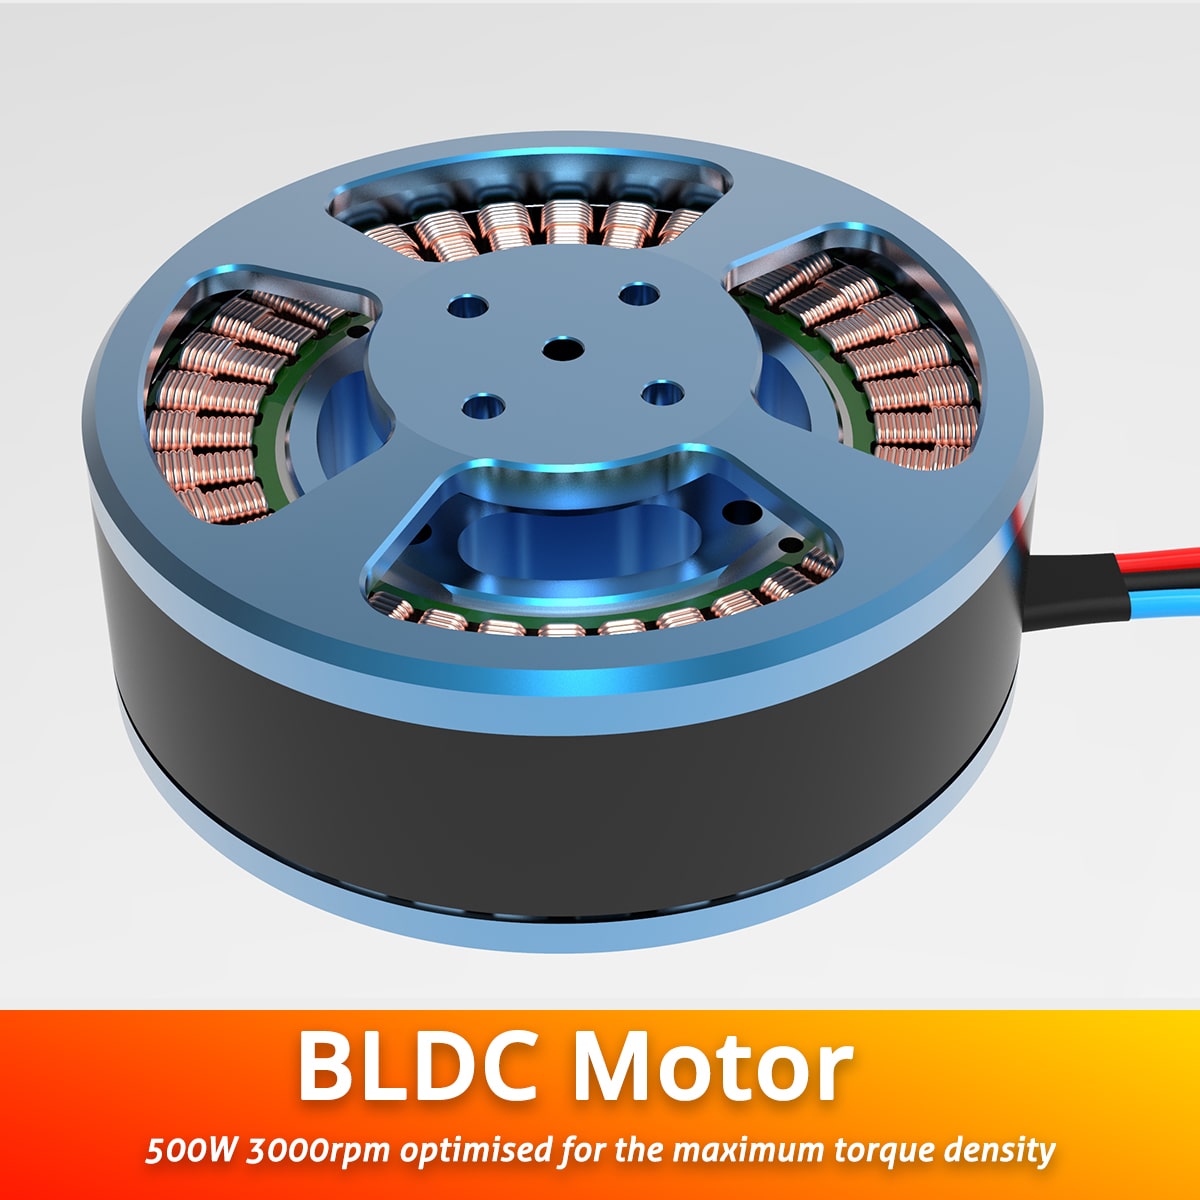 The Best BLDC Motor 500W 3000rpm - Retech Solutions